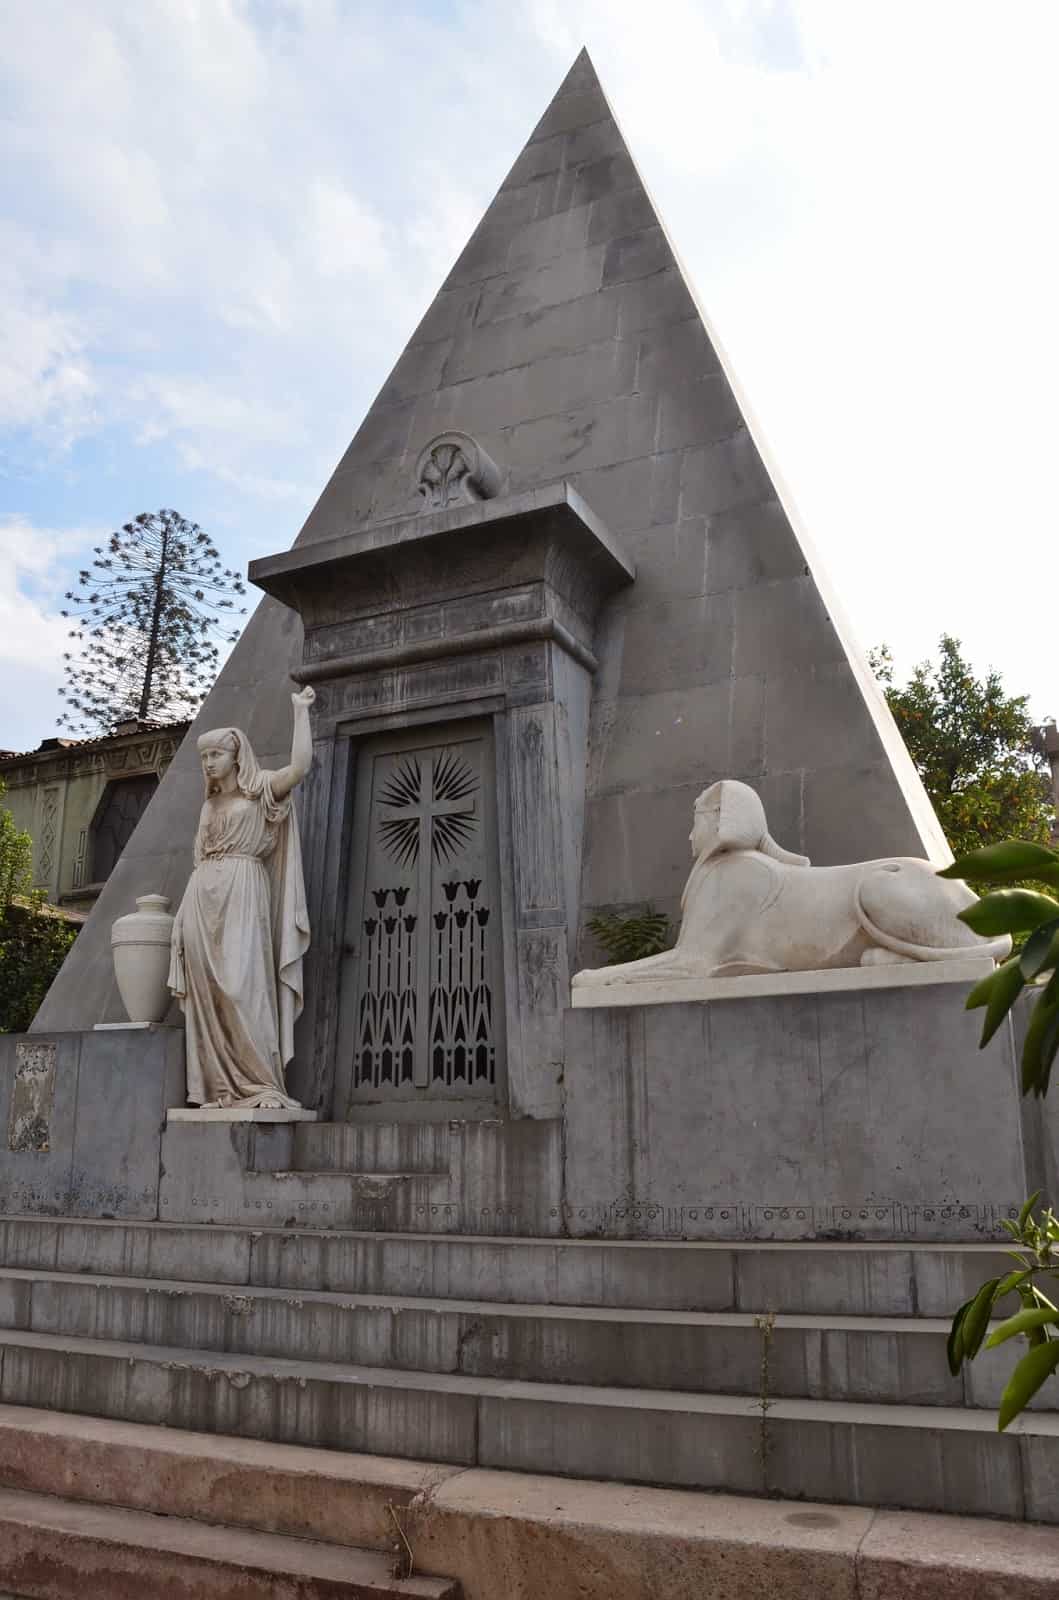 Egyptian temple tomb at Cementerio General in Santiago de Chile